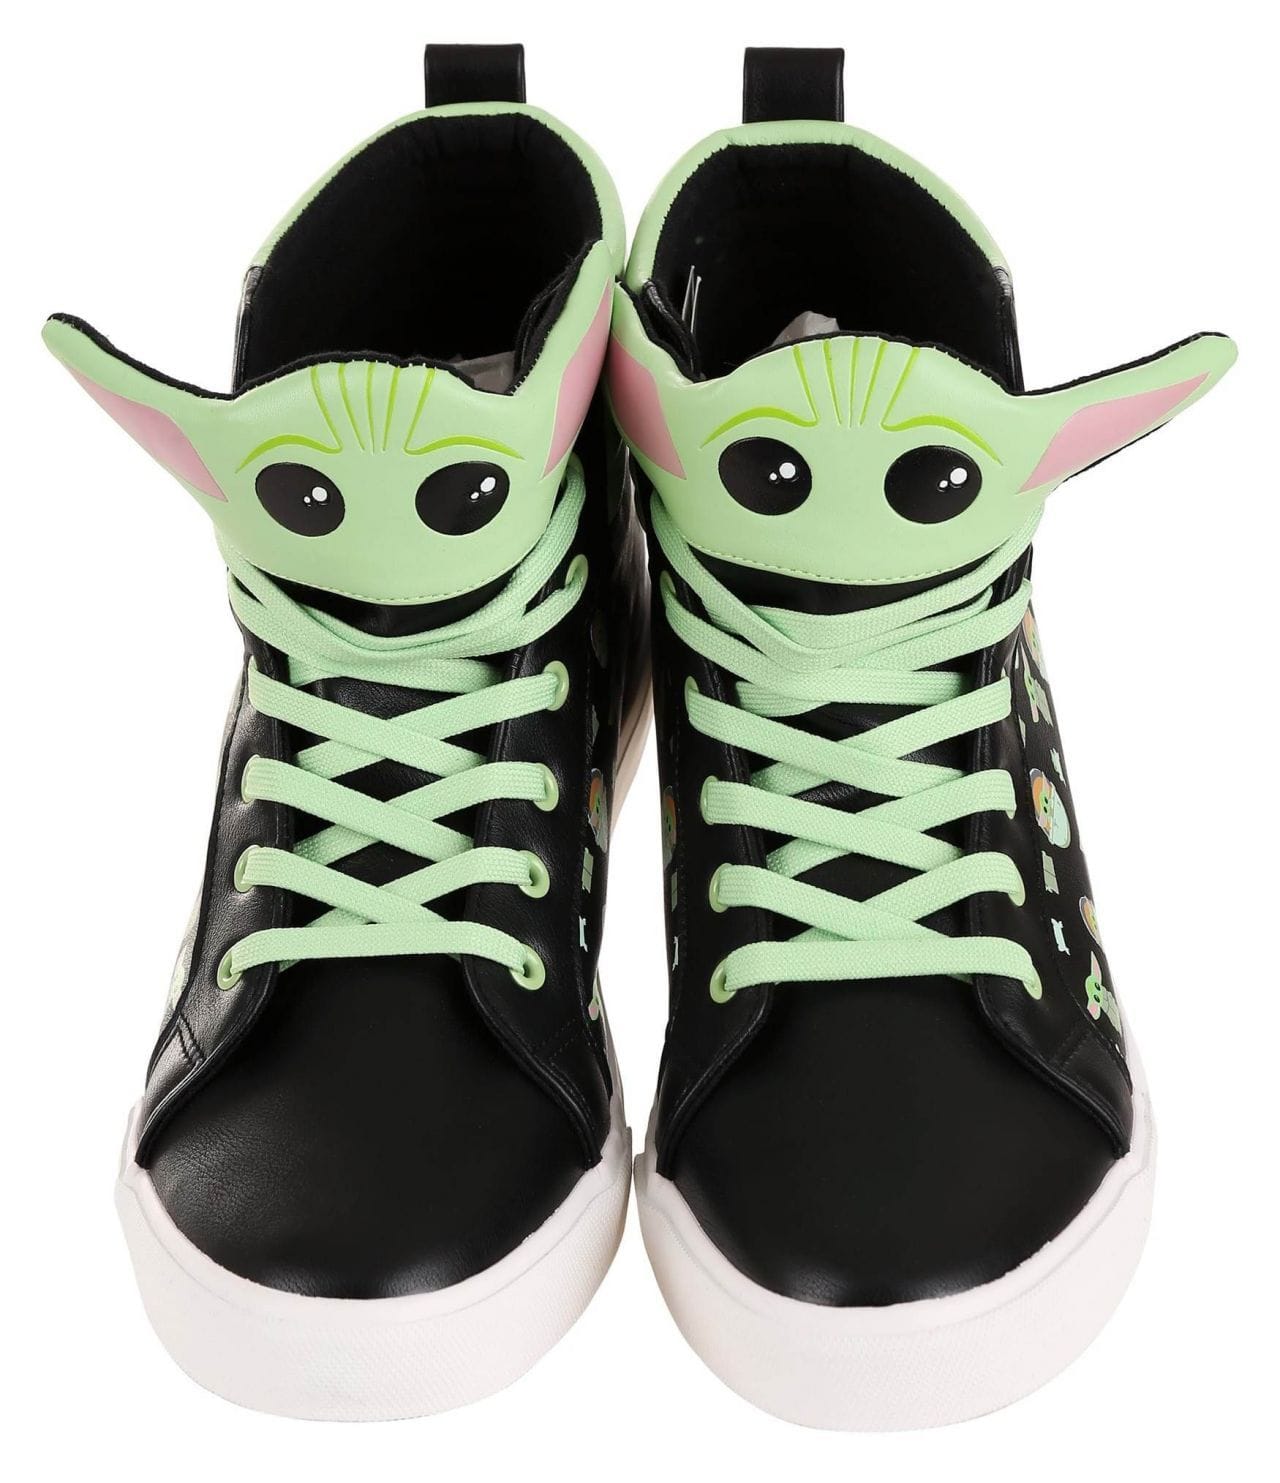 🔥 Star Wars : allez vous craquer pour les sneakers Baby Yoda ? #7